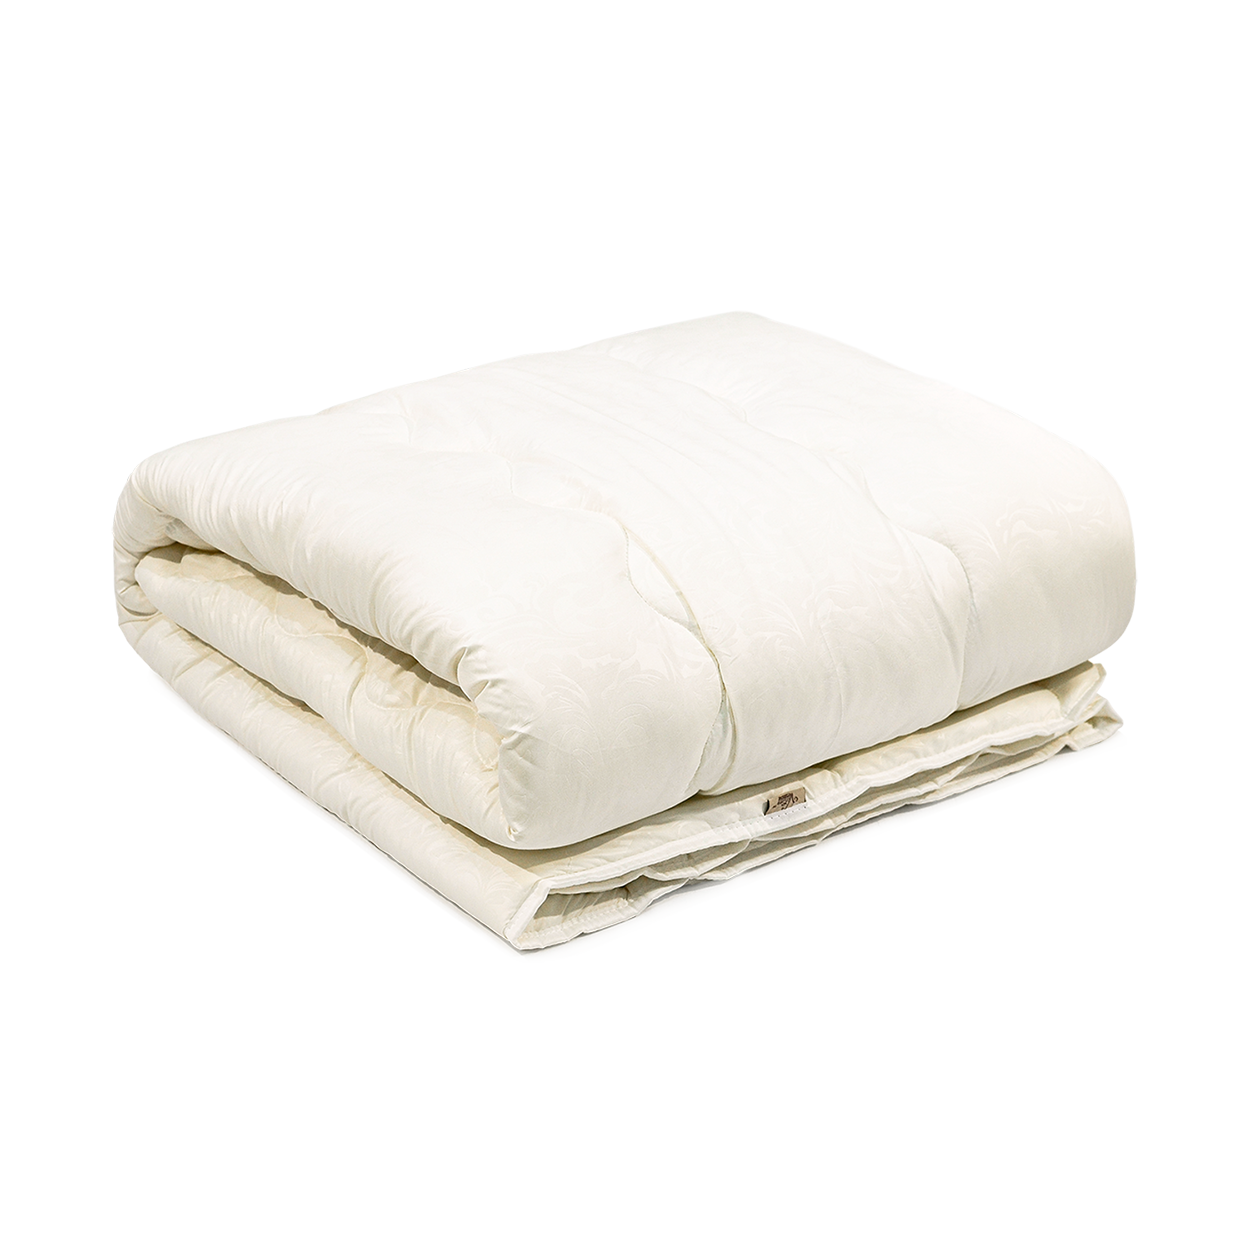 Одеяло силиконовое стеганое Вилюта Relax 200х220